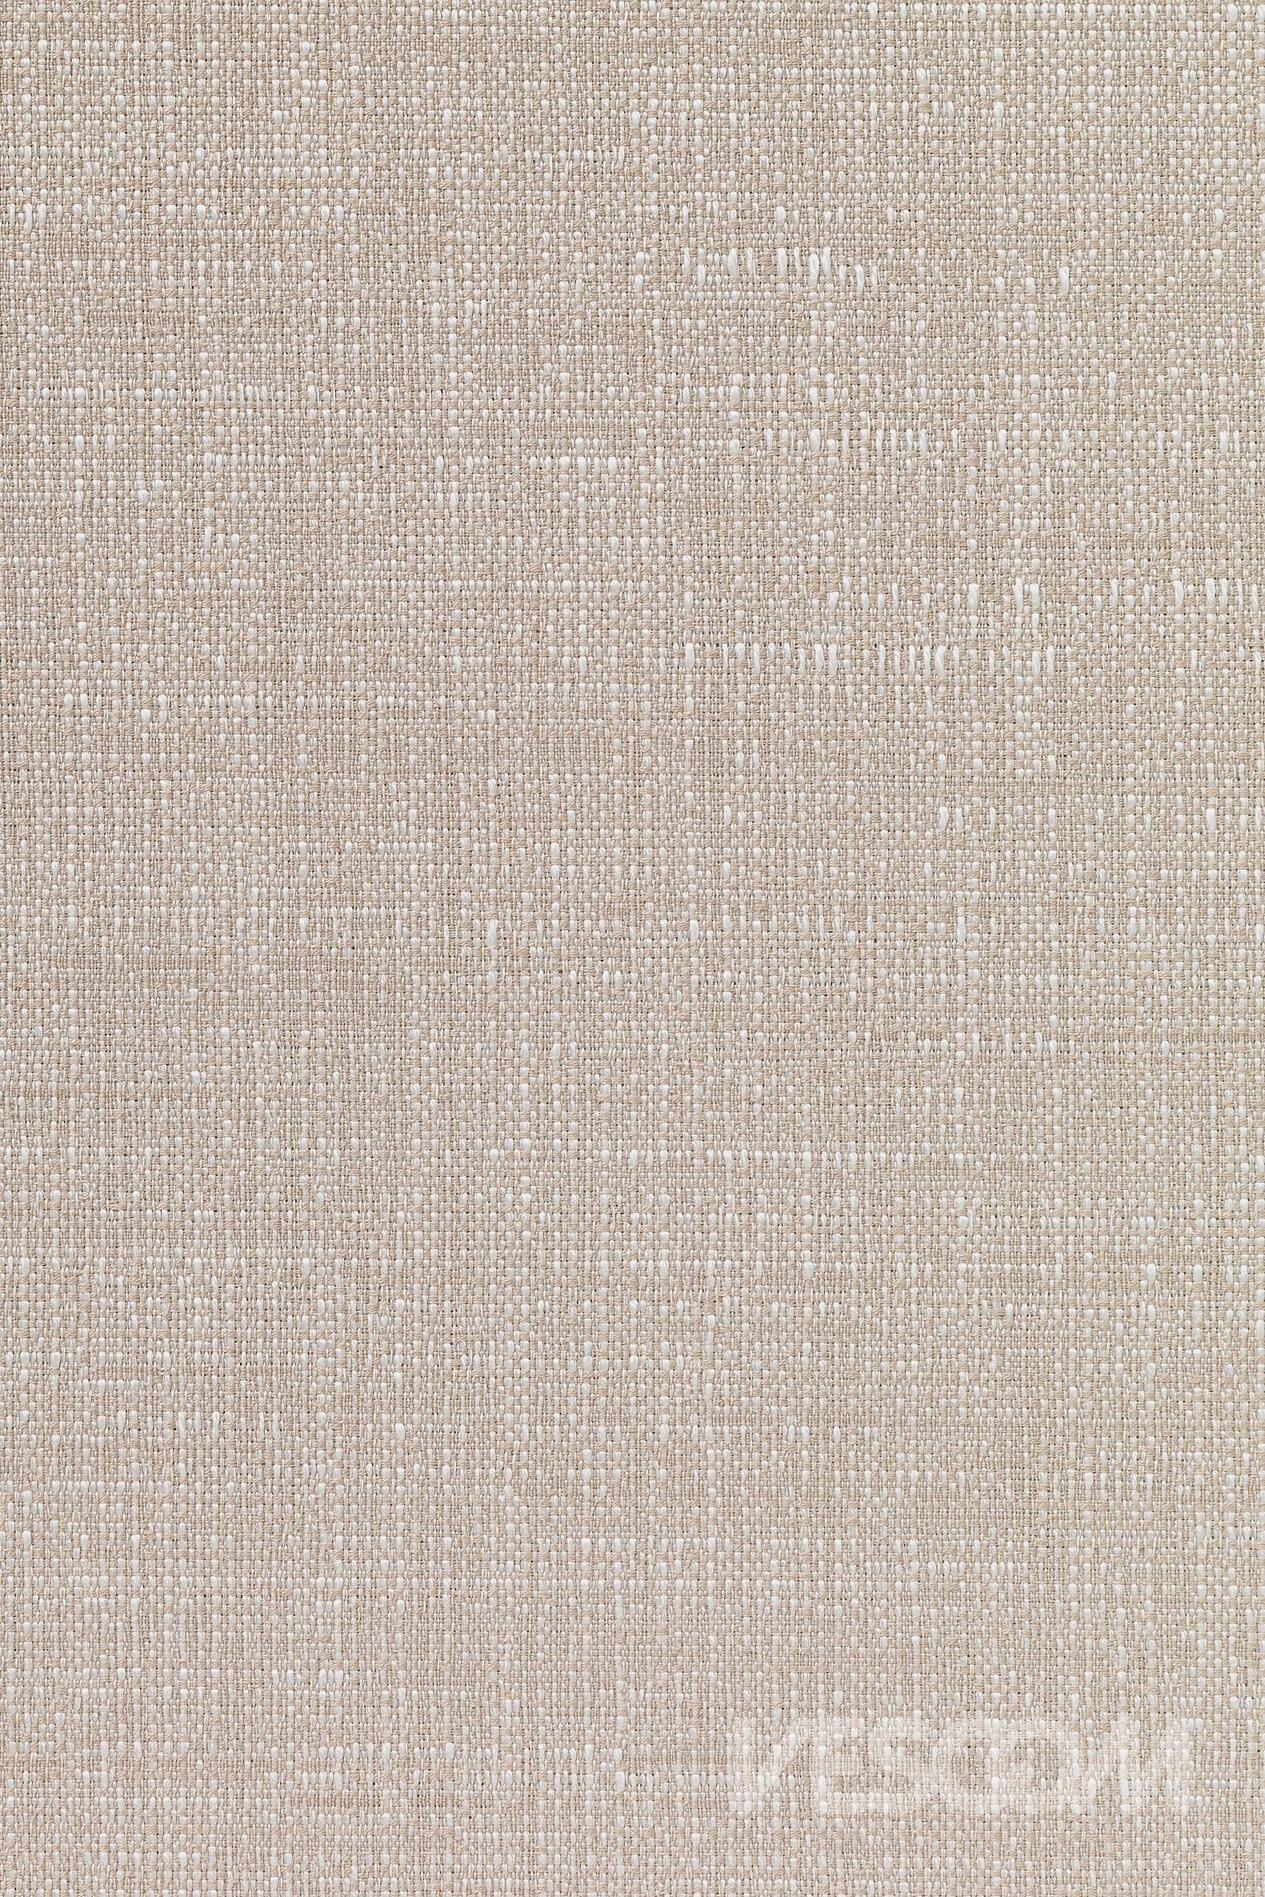 vescom-rona-curtain-fabric-8080-04